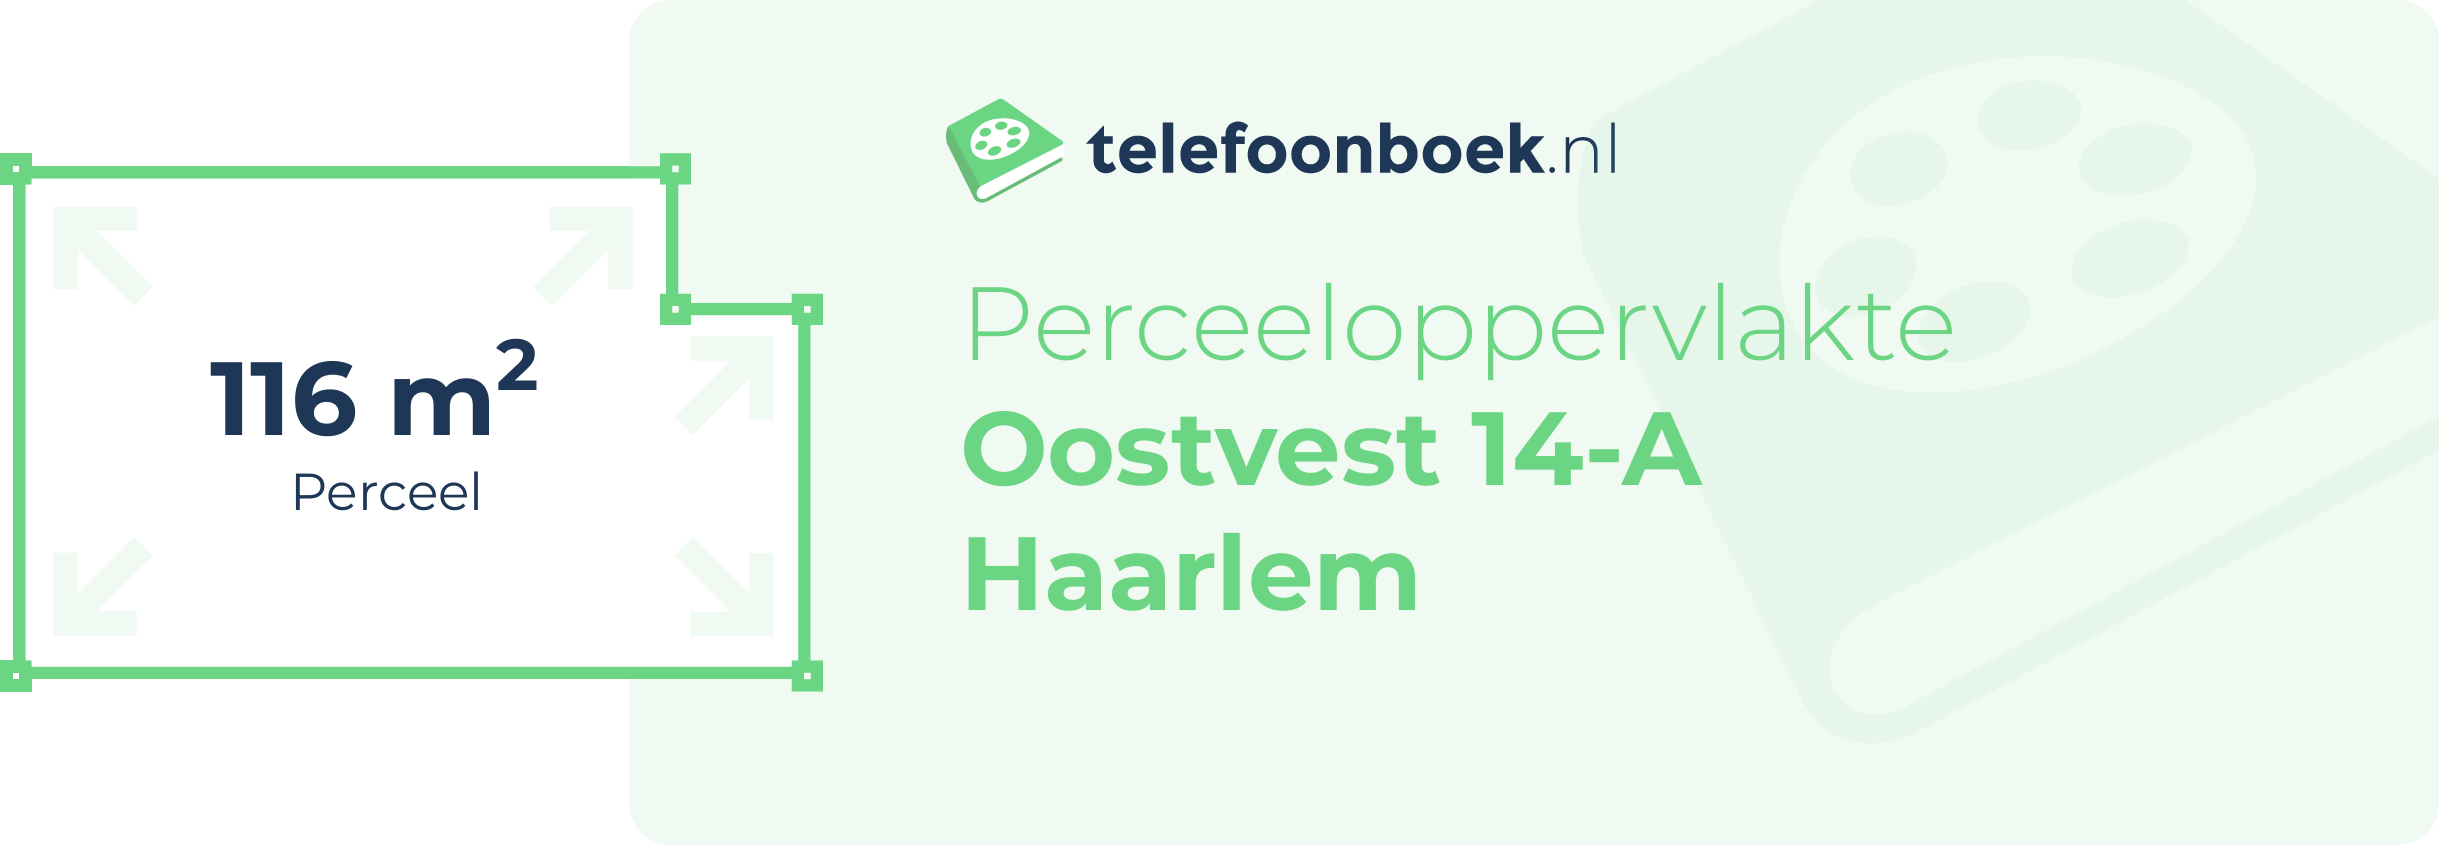 Perceeloppervlakte Oostvest 14-A Haarlem